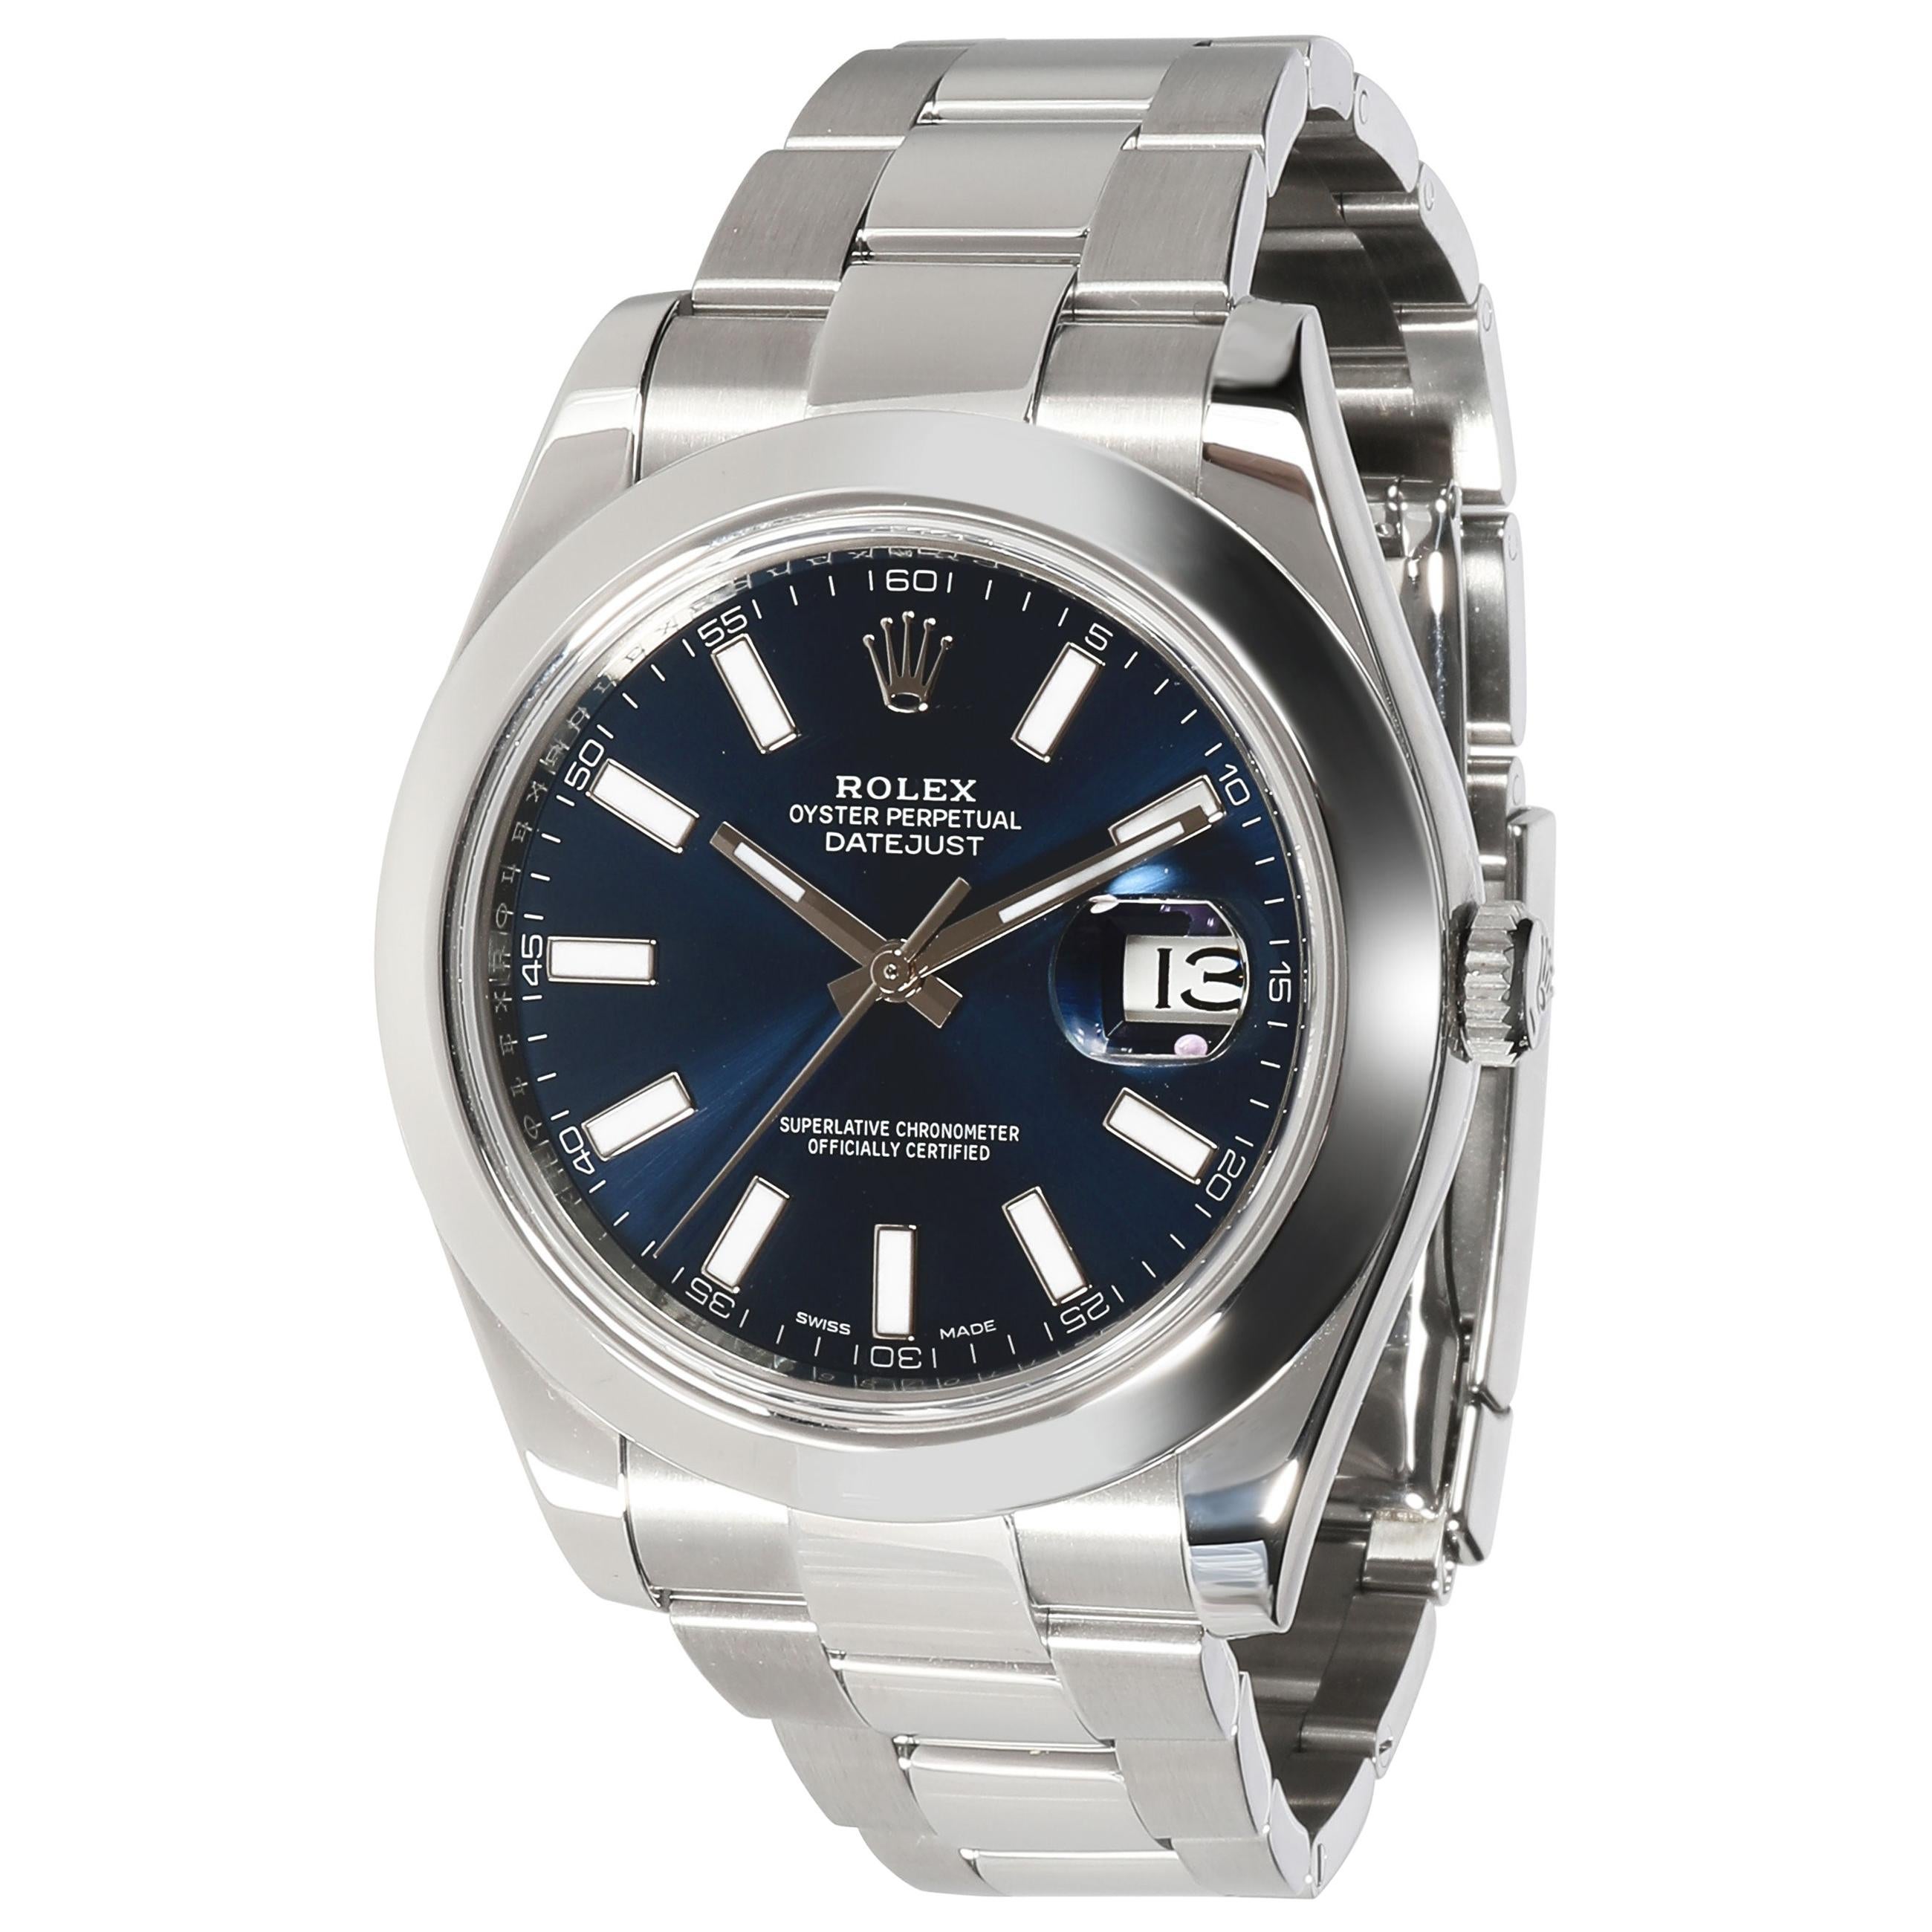 Rolex Datejust II 116300 Men's Watch in Stainless Steel